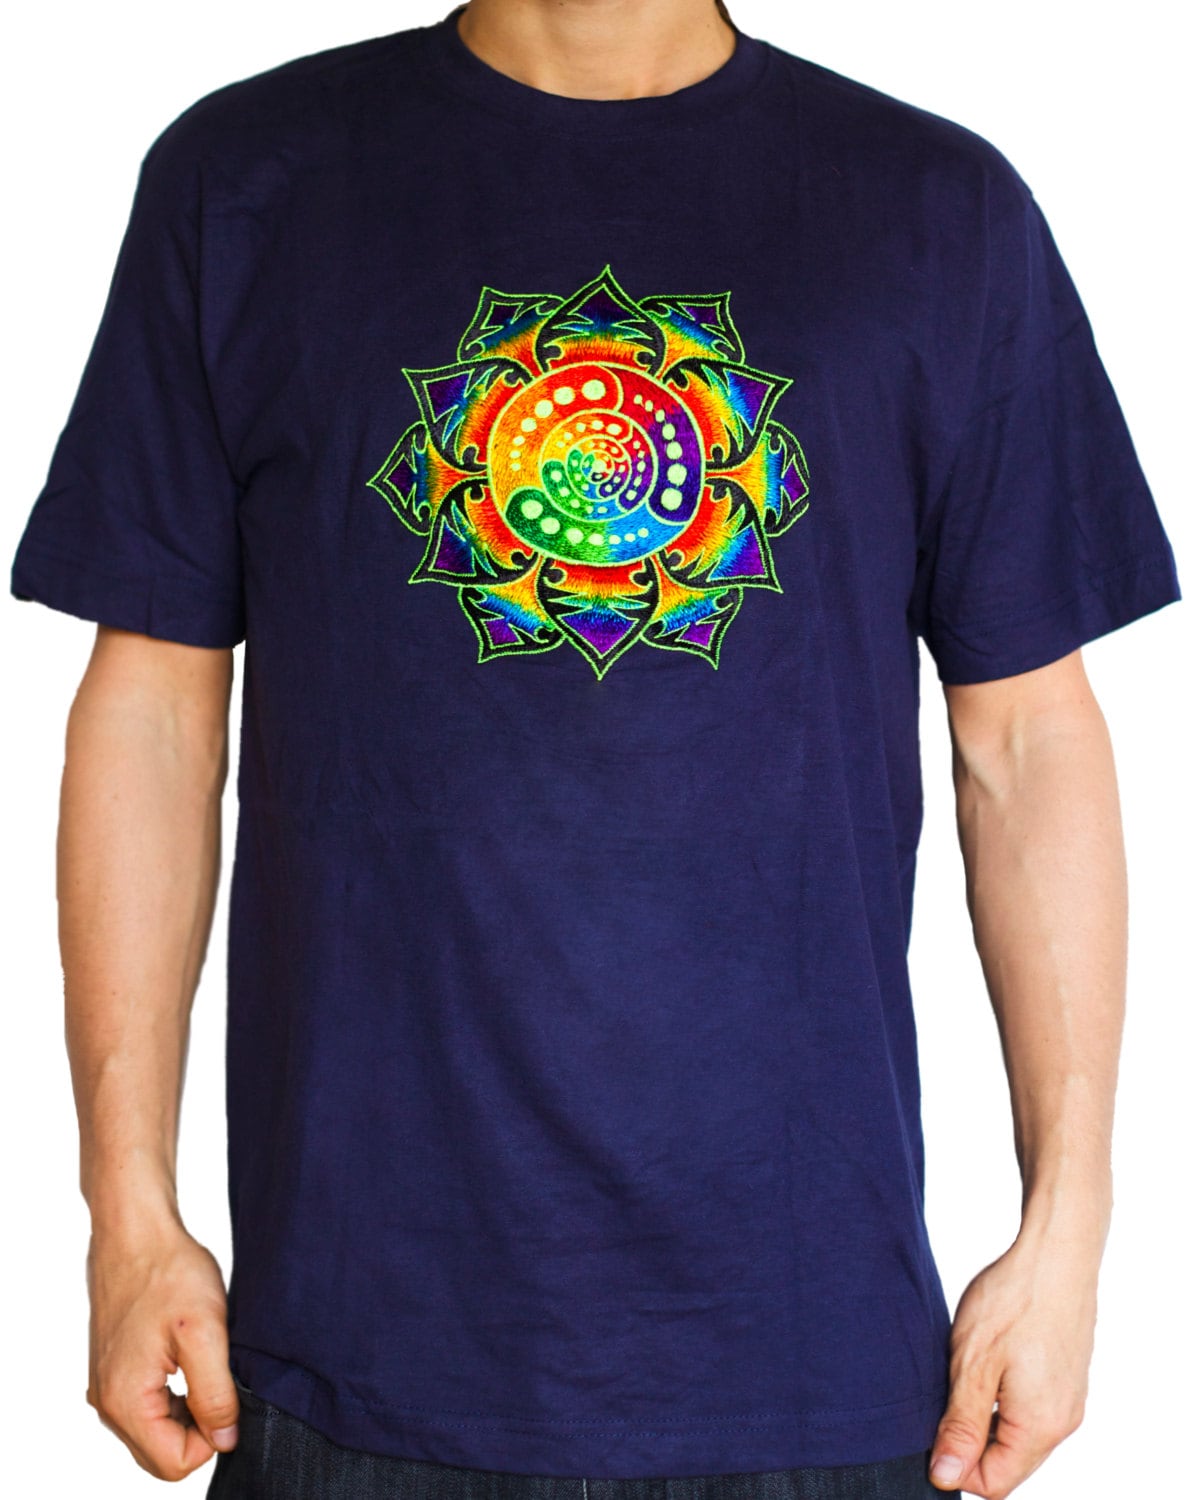 Attributes crop circle T-Shirt rainbow mandala blacklight handmade embroidery no print psy goa t-shirt